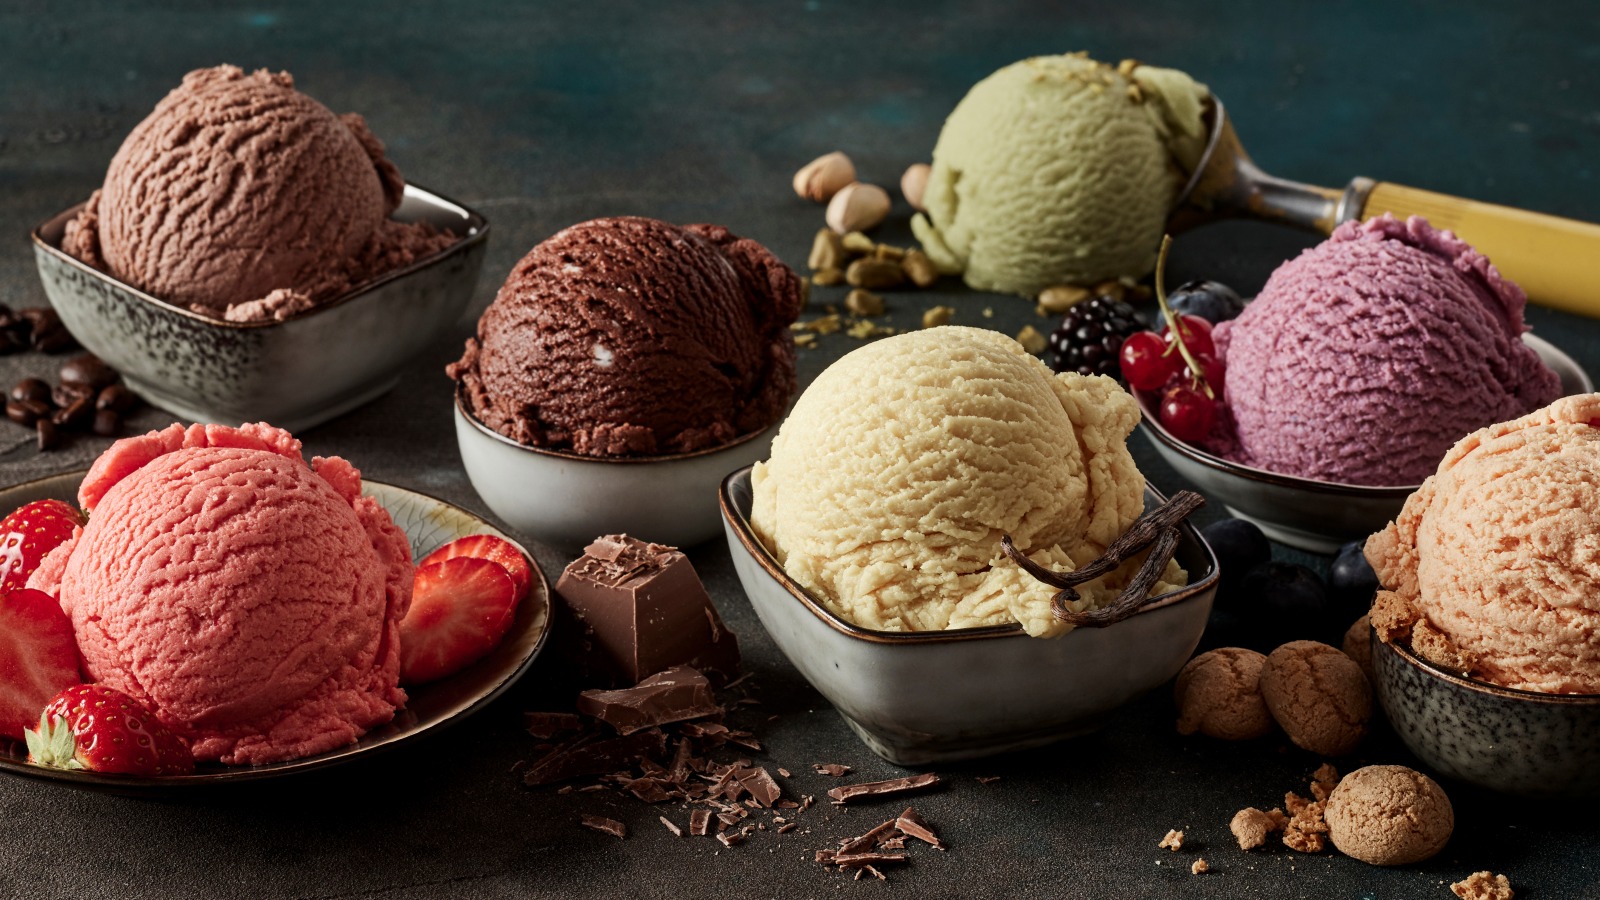 Low-calorie ice cream: 9 healthier ice creams to try